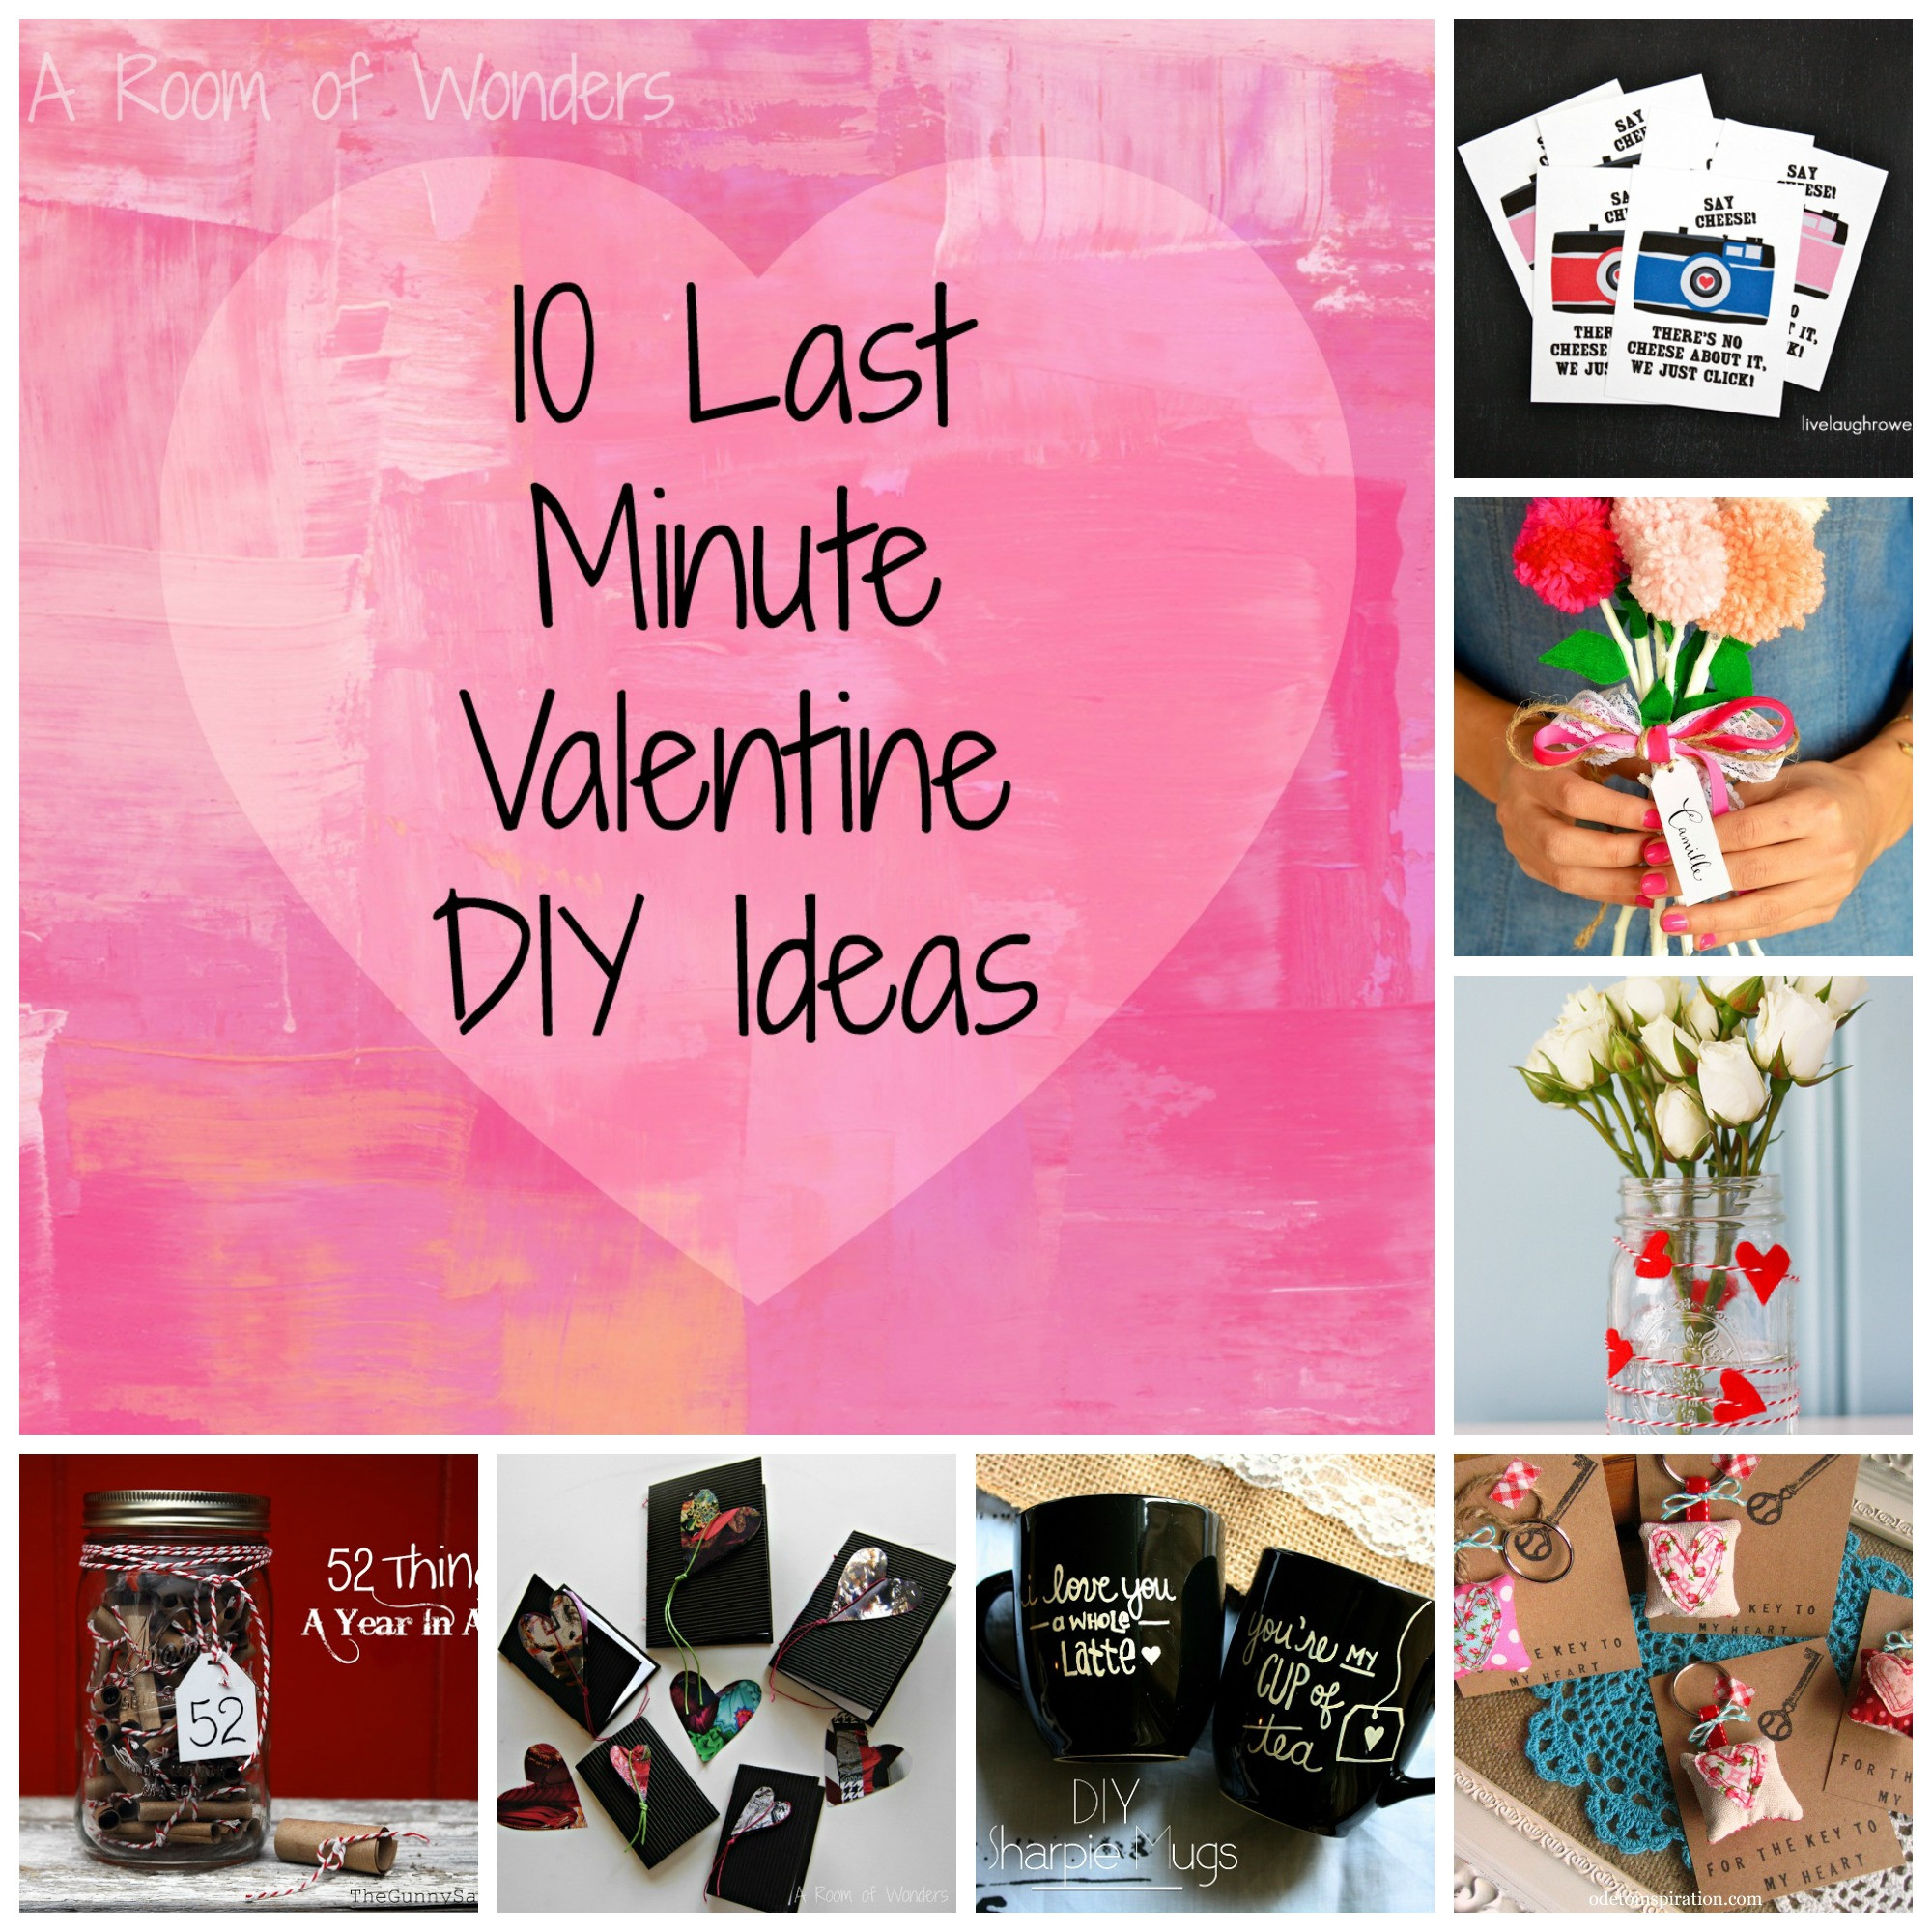 Last Minute Gift Ideas For Boyfriend
 Projects I like 10 Last Minute Valentine DIY Ideas – A